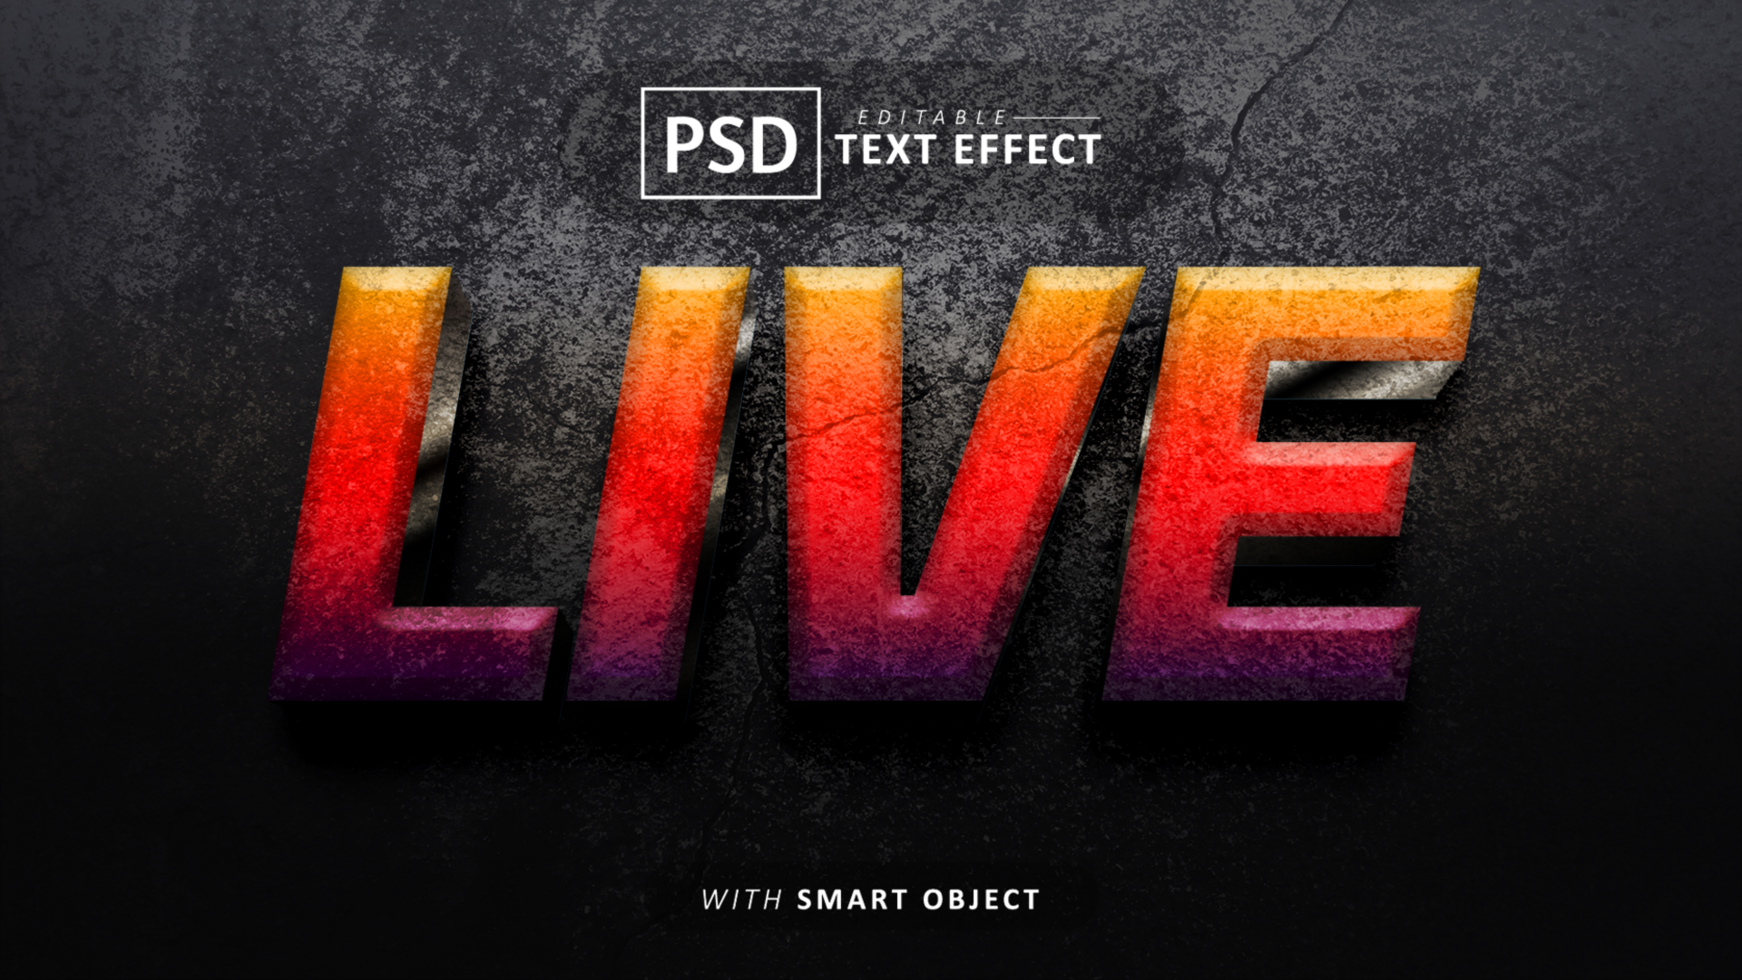 Live 3d text effect editable psd